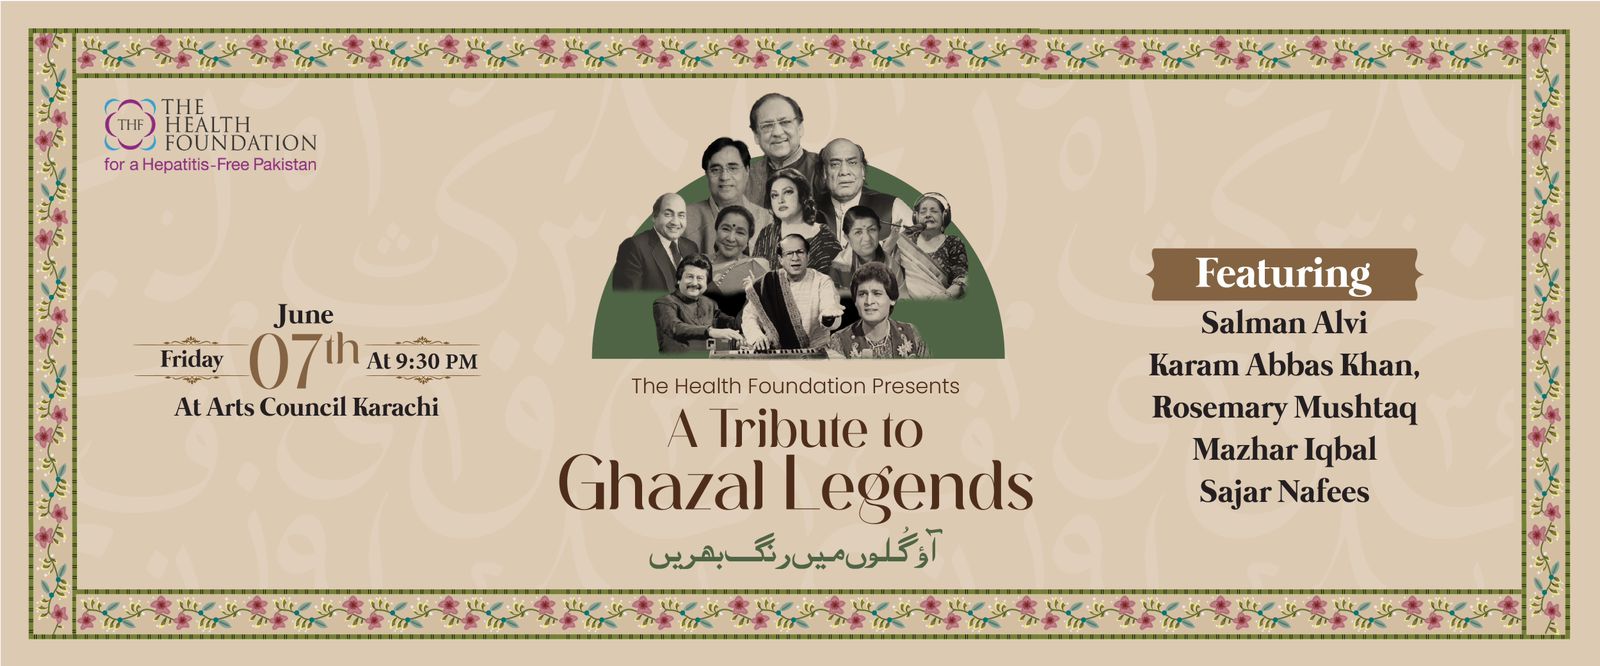 A Tribute to Ghazal Legends Featuring Salman Alvi 